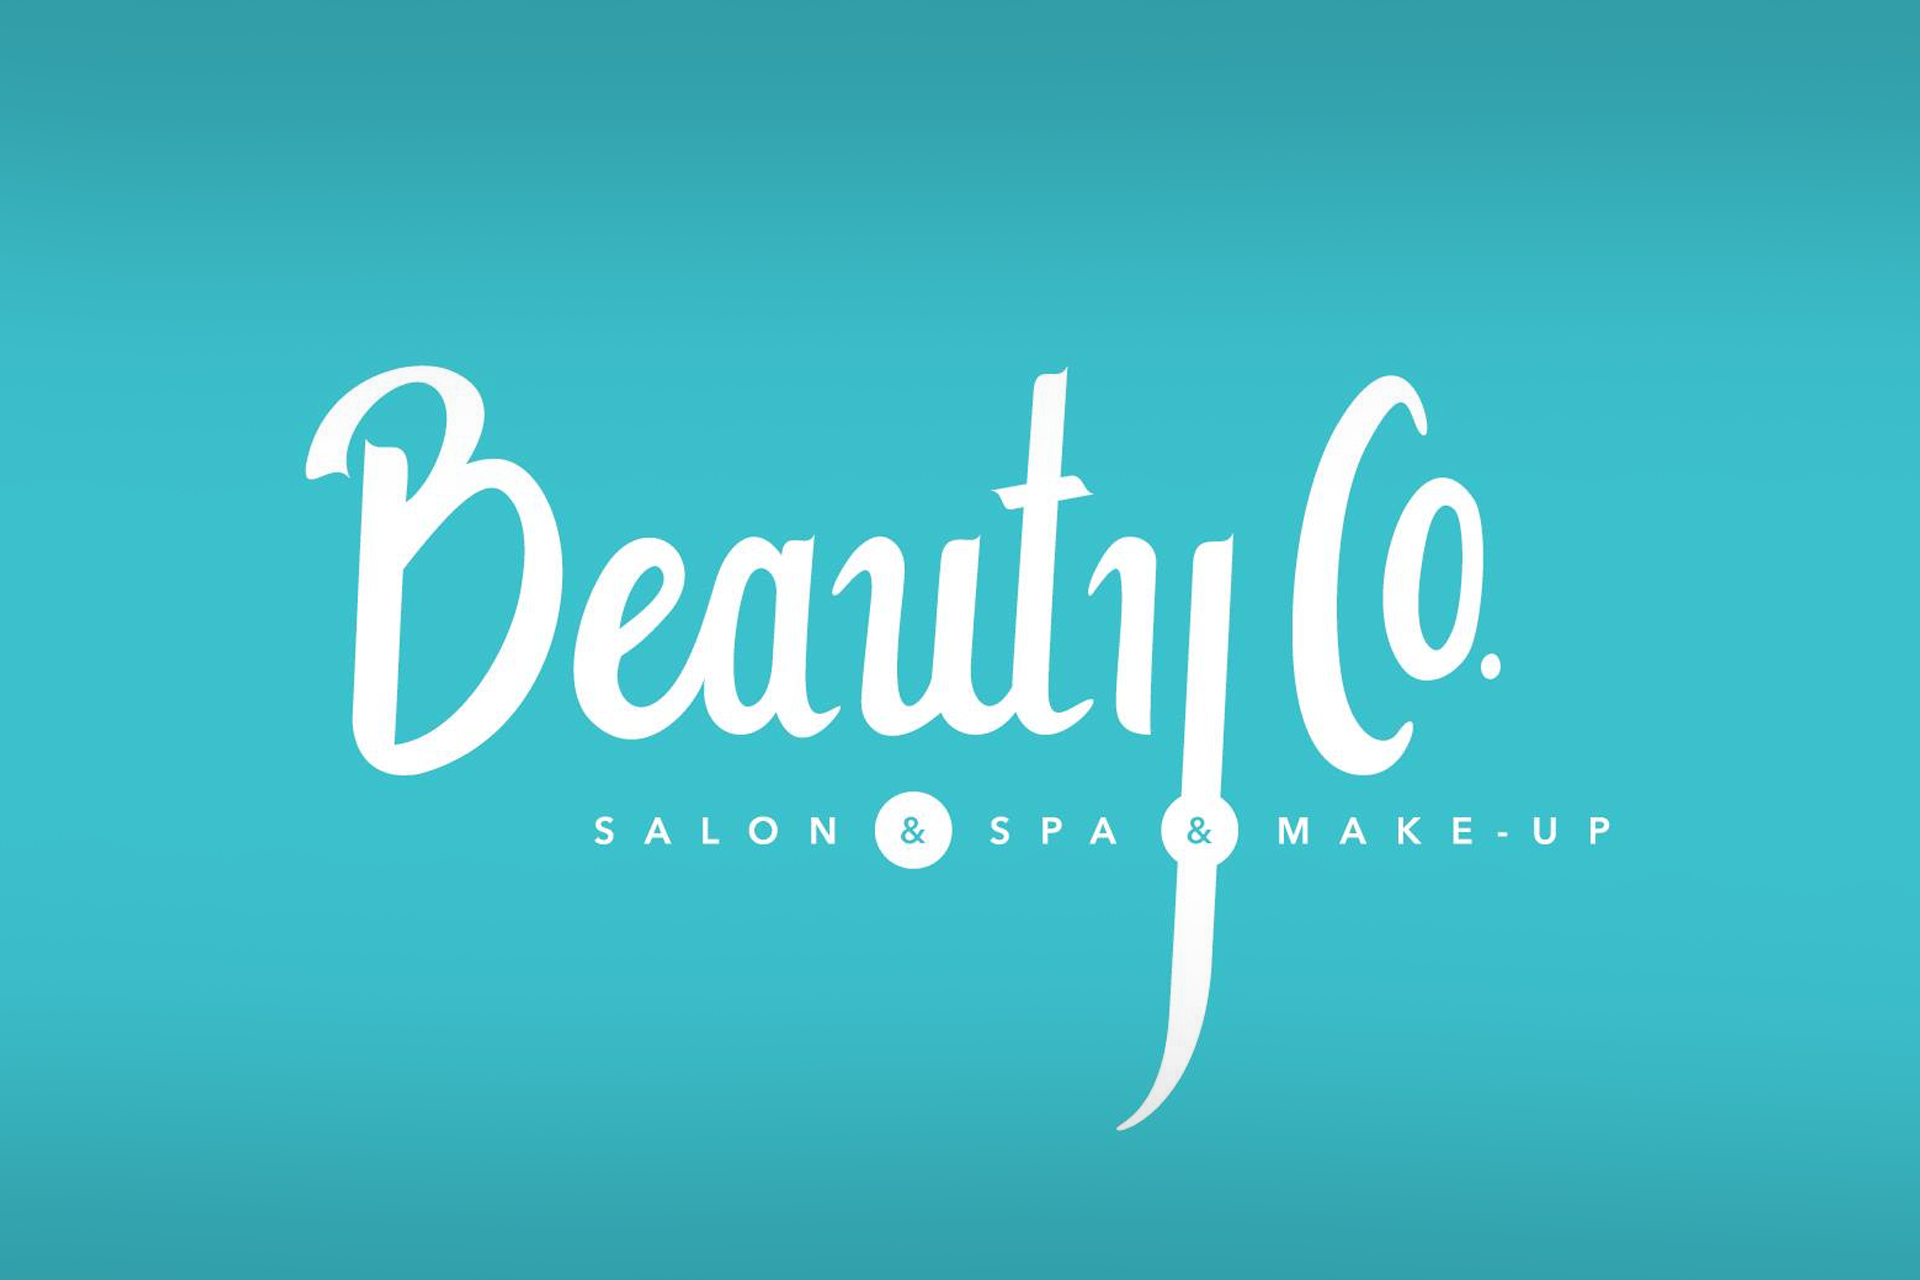 Salon Beauty Co